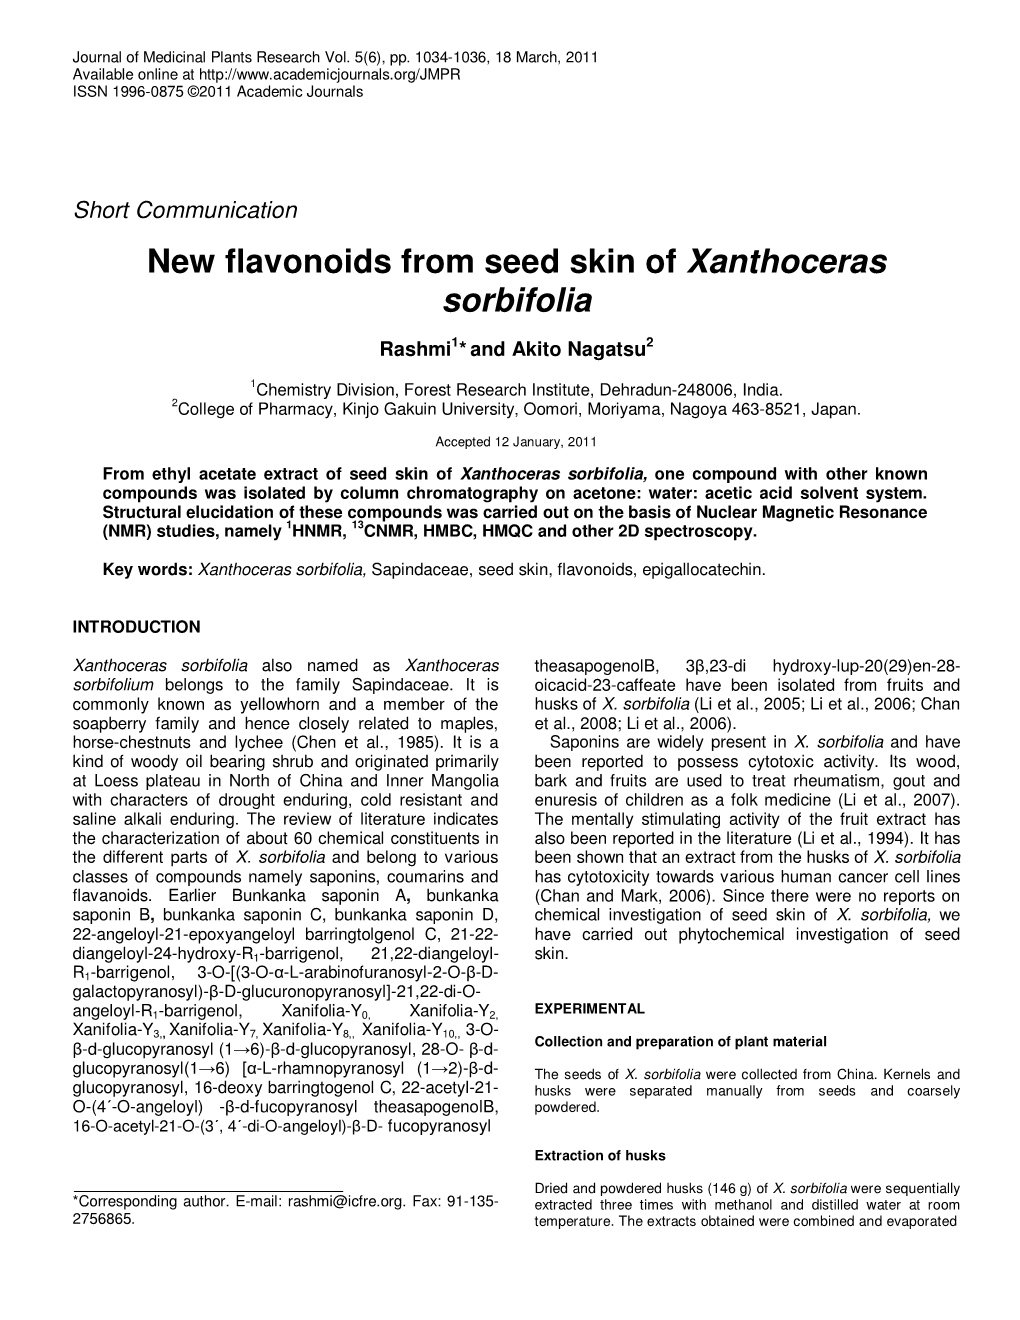 New Flavonoids from Seed Skin of Xanthoceras Sorbifolia